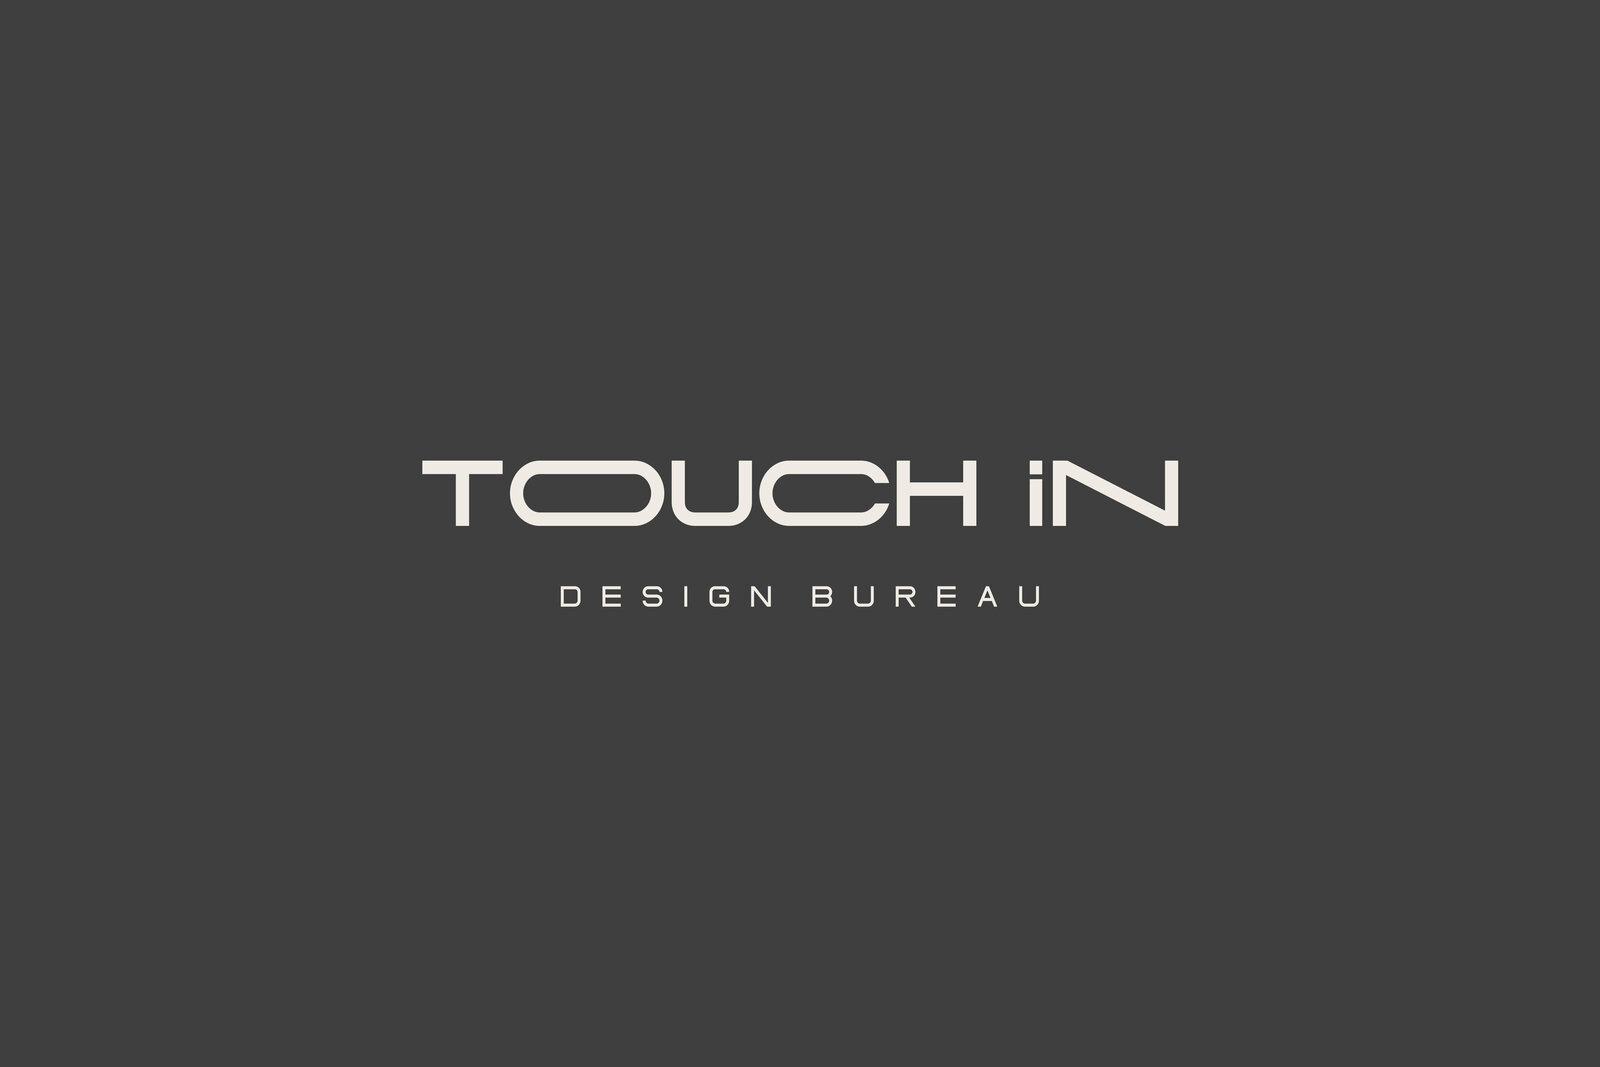 Touch-in-design-bureau-Persona-Vera-branding-16 copie